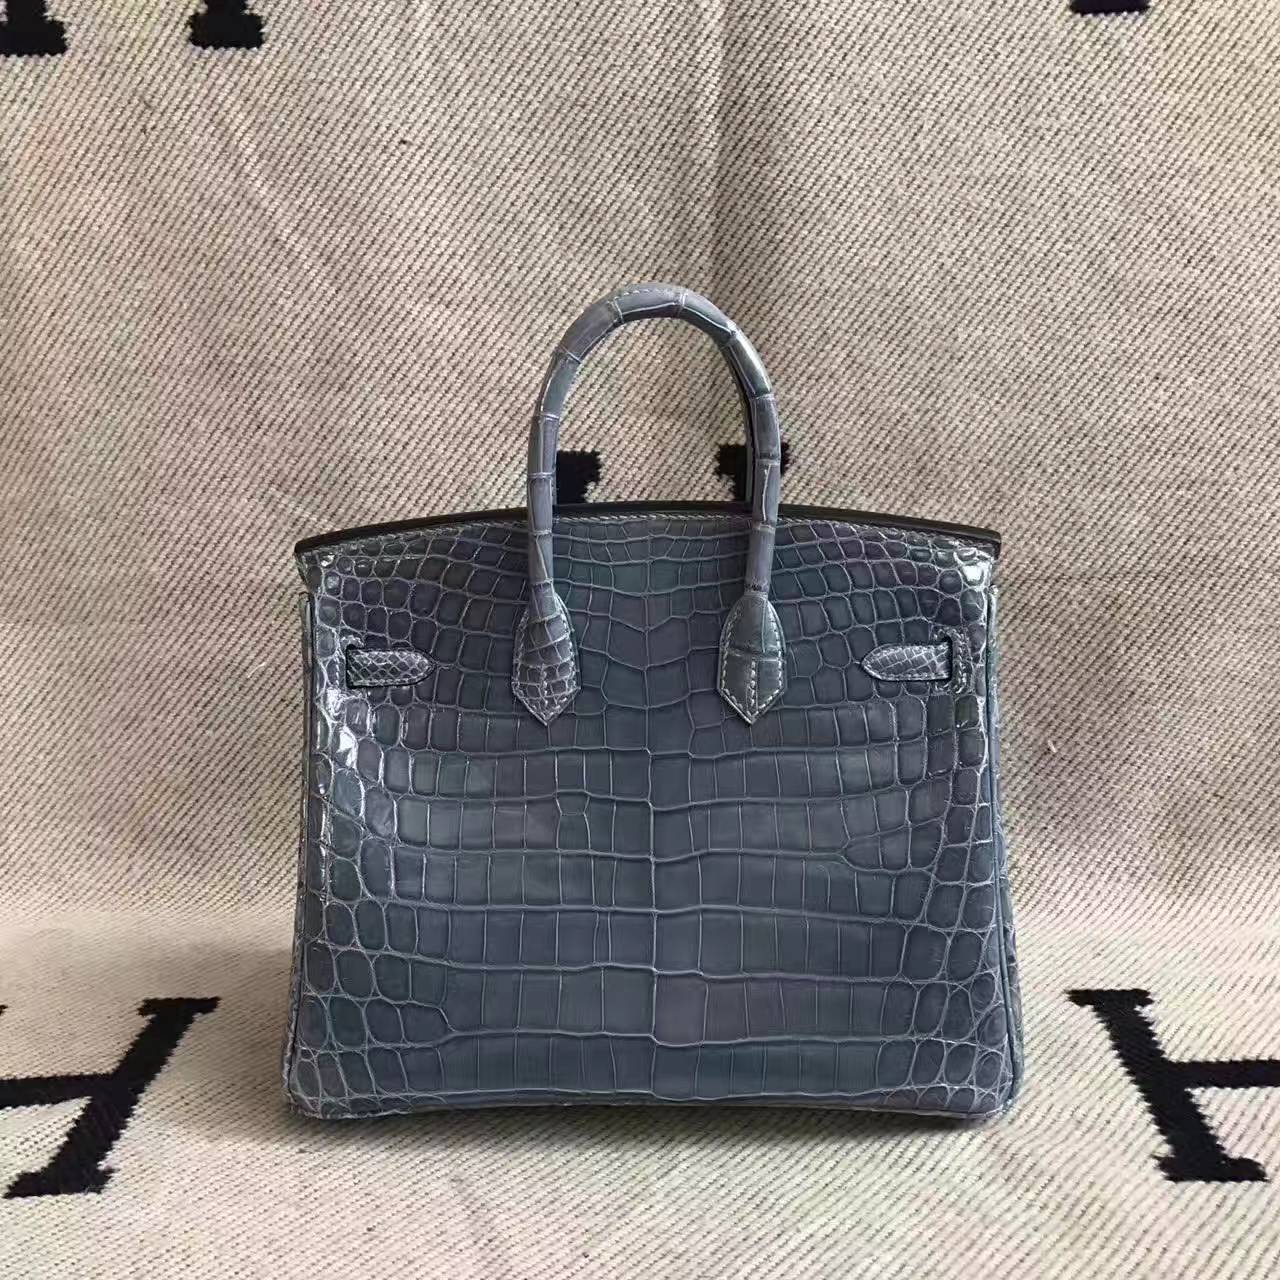 Discount Hermes CK75 Blue Jean Crocodile Shiny Leather Birkin Bag 25cm